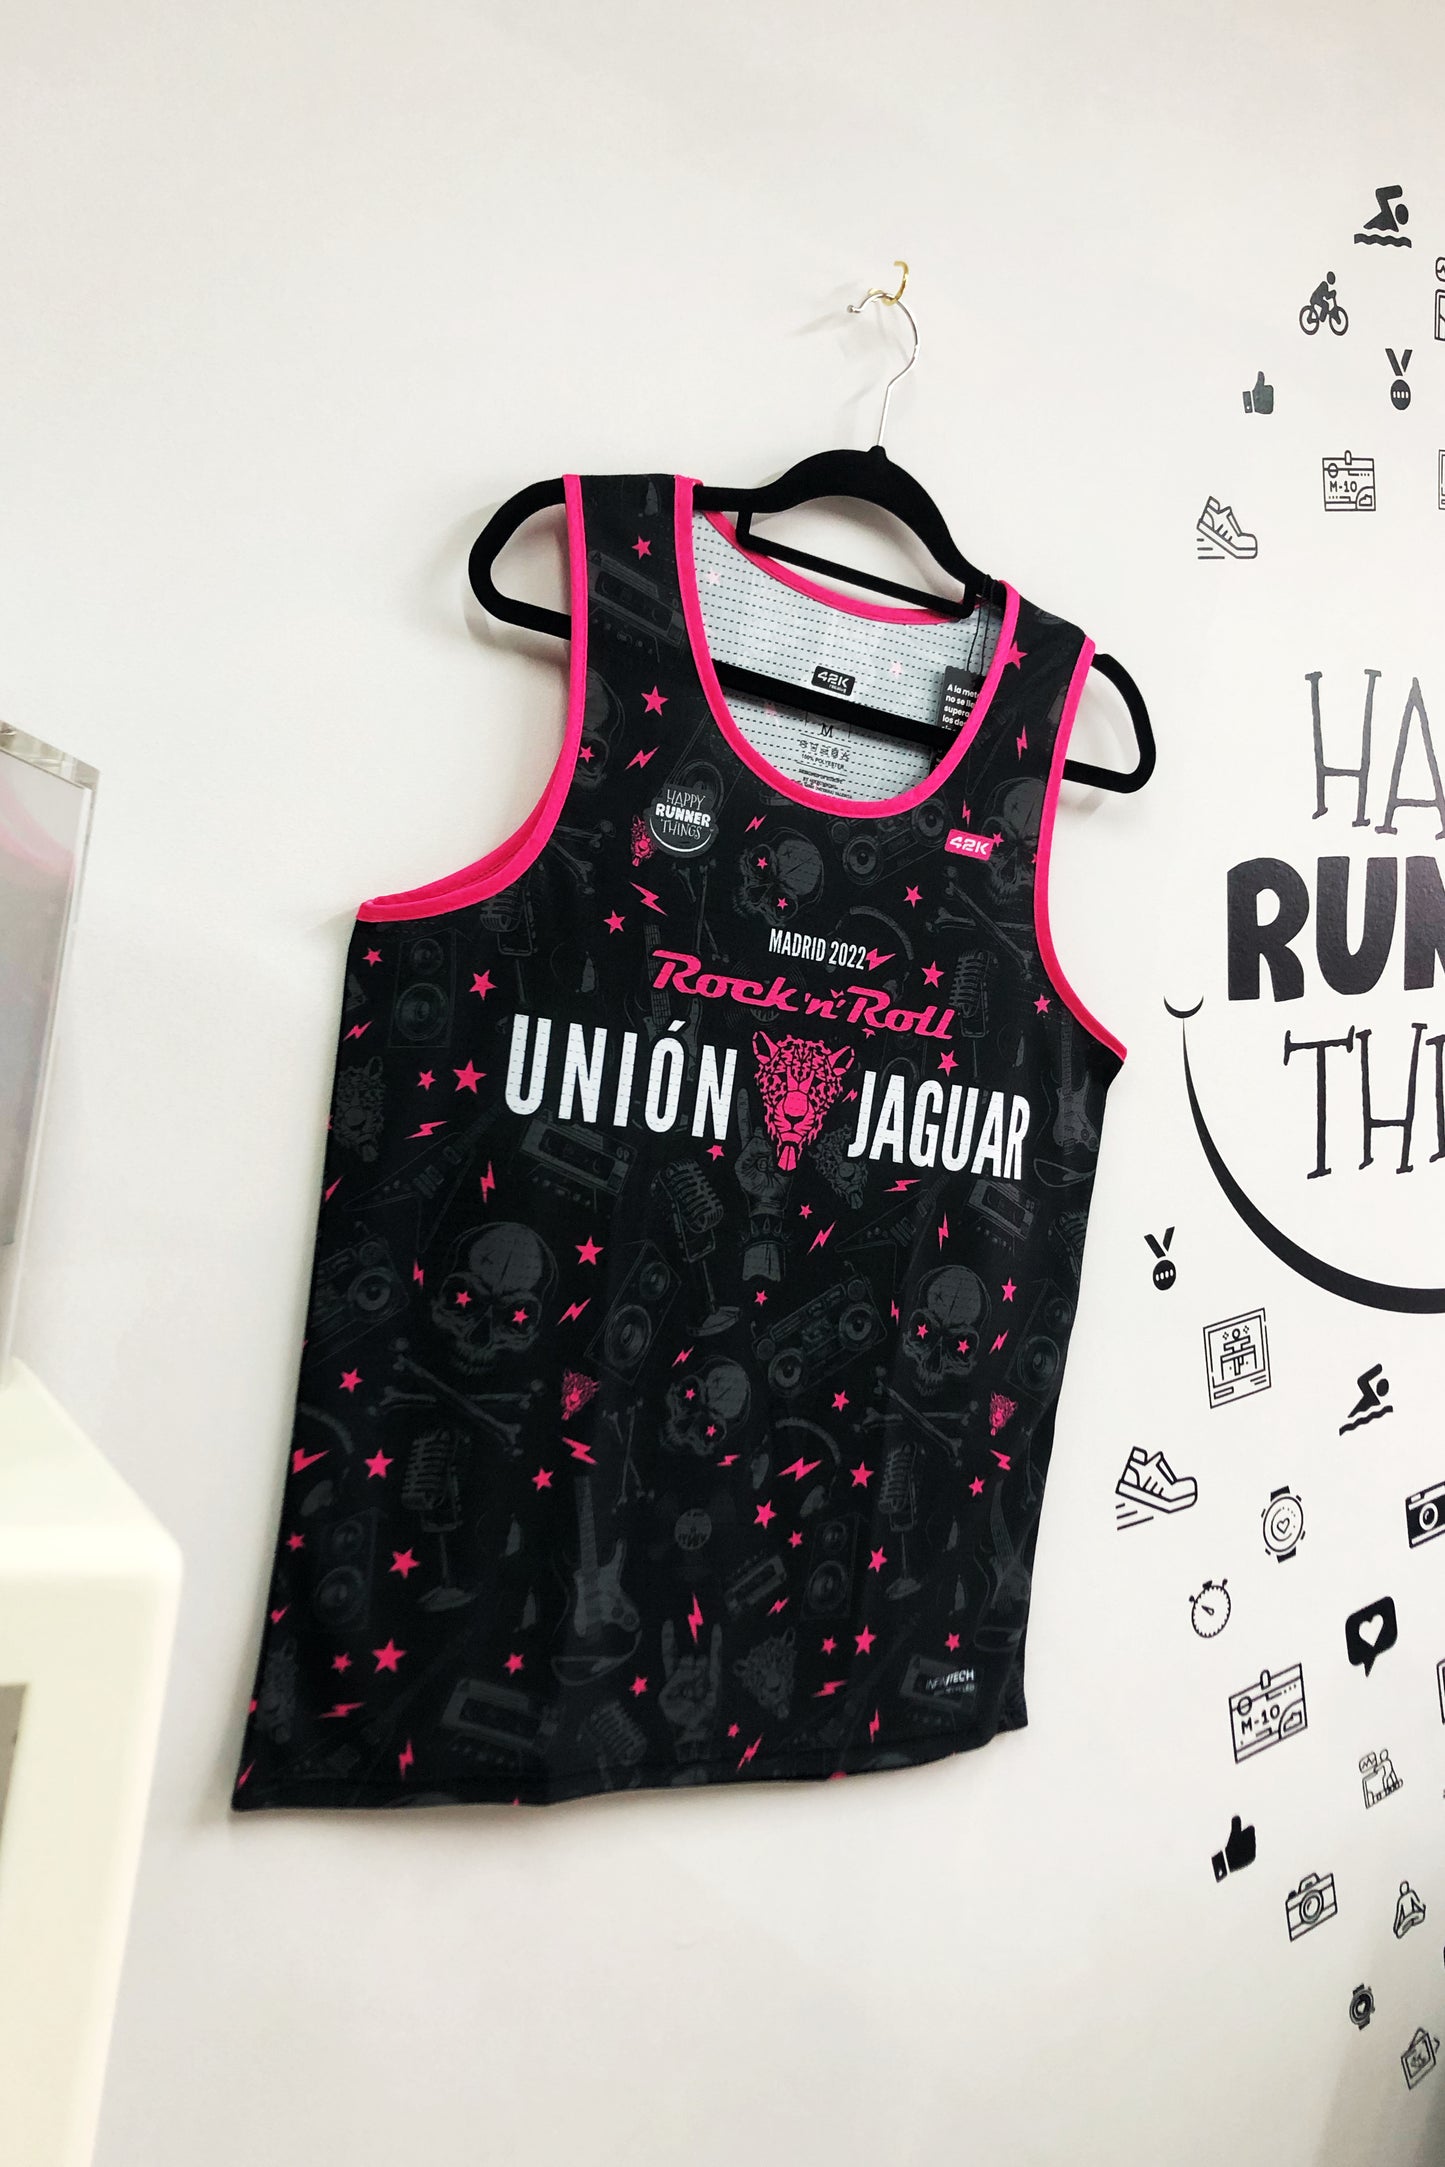 Unión Jaguar - Camiseta Tirantes Maratón Madrid 2022